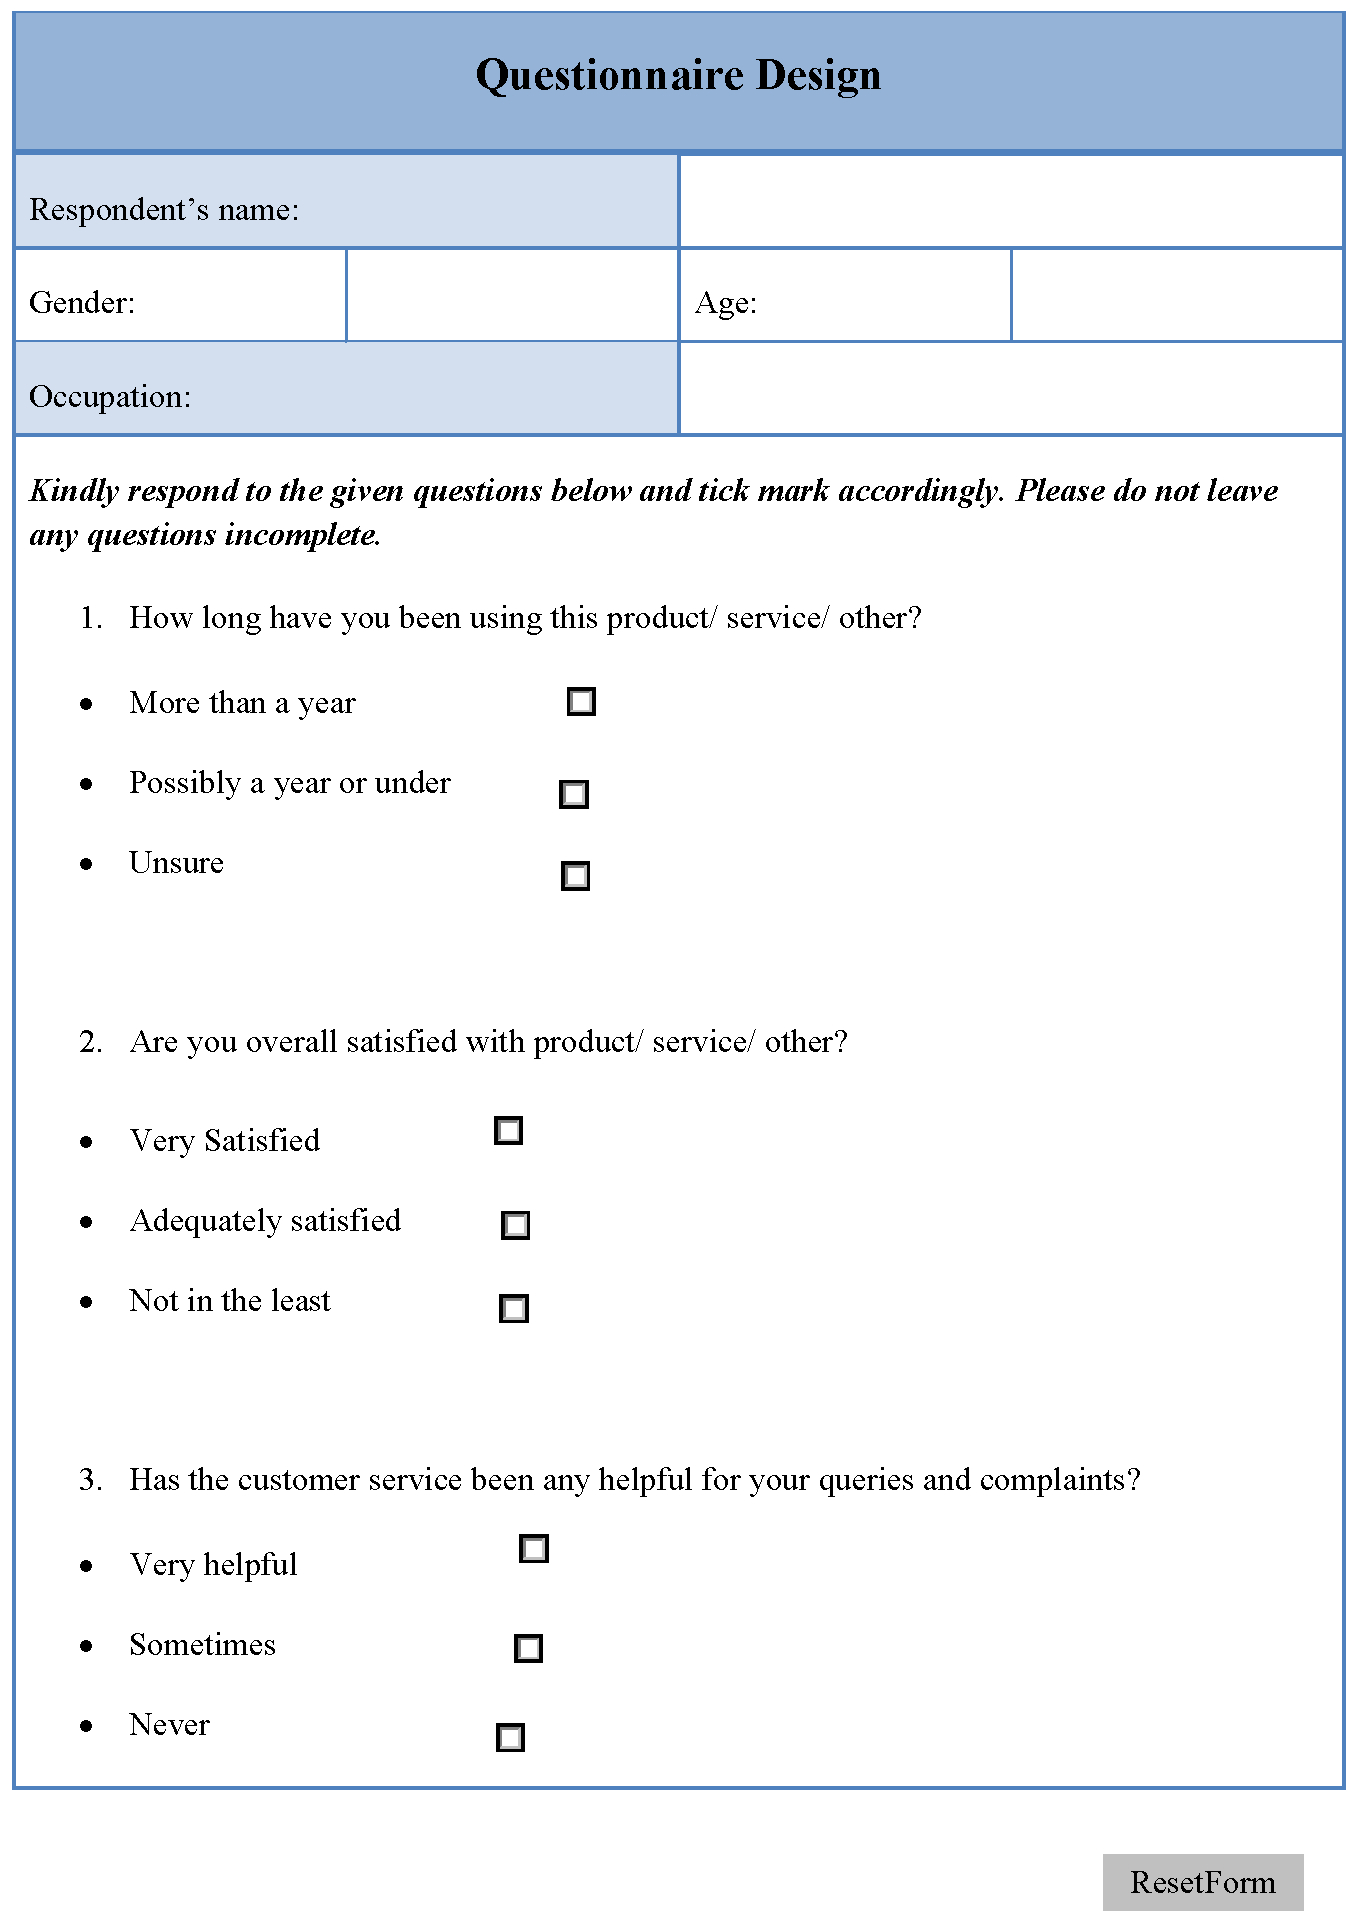 Questionnaire Design Template | Editable Forms With Regard To Questionnaire Design Template Word